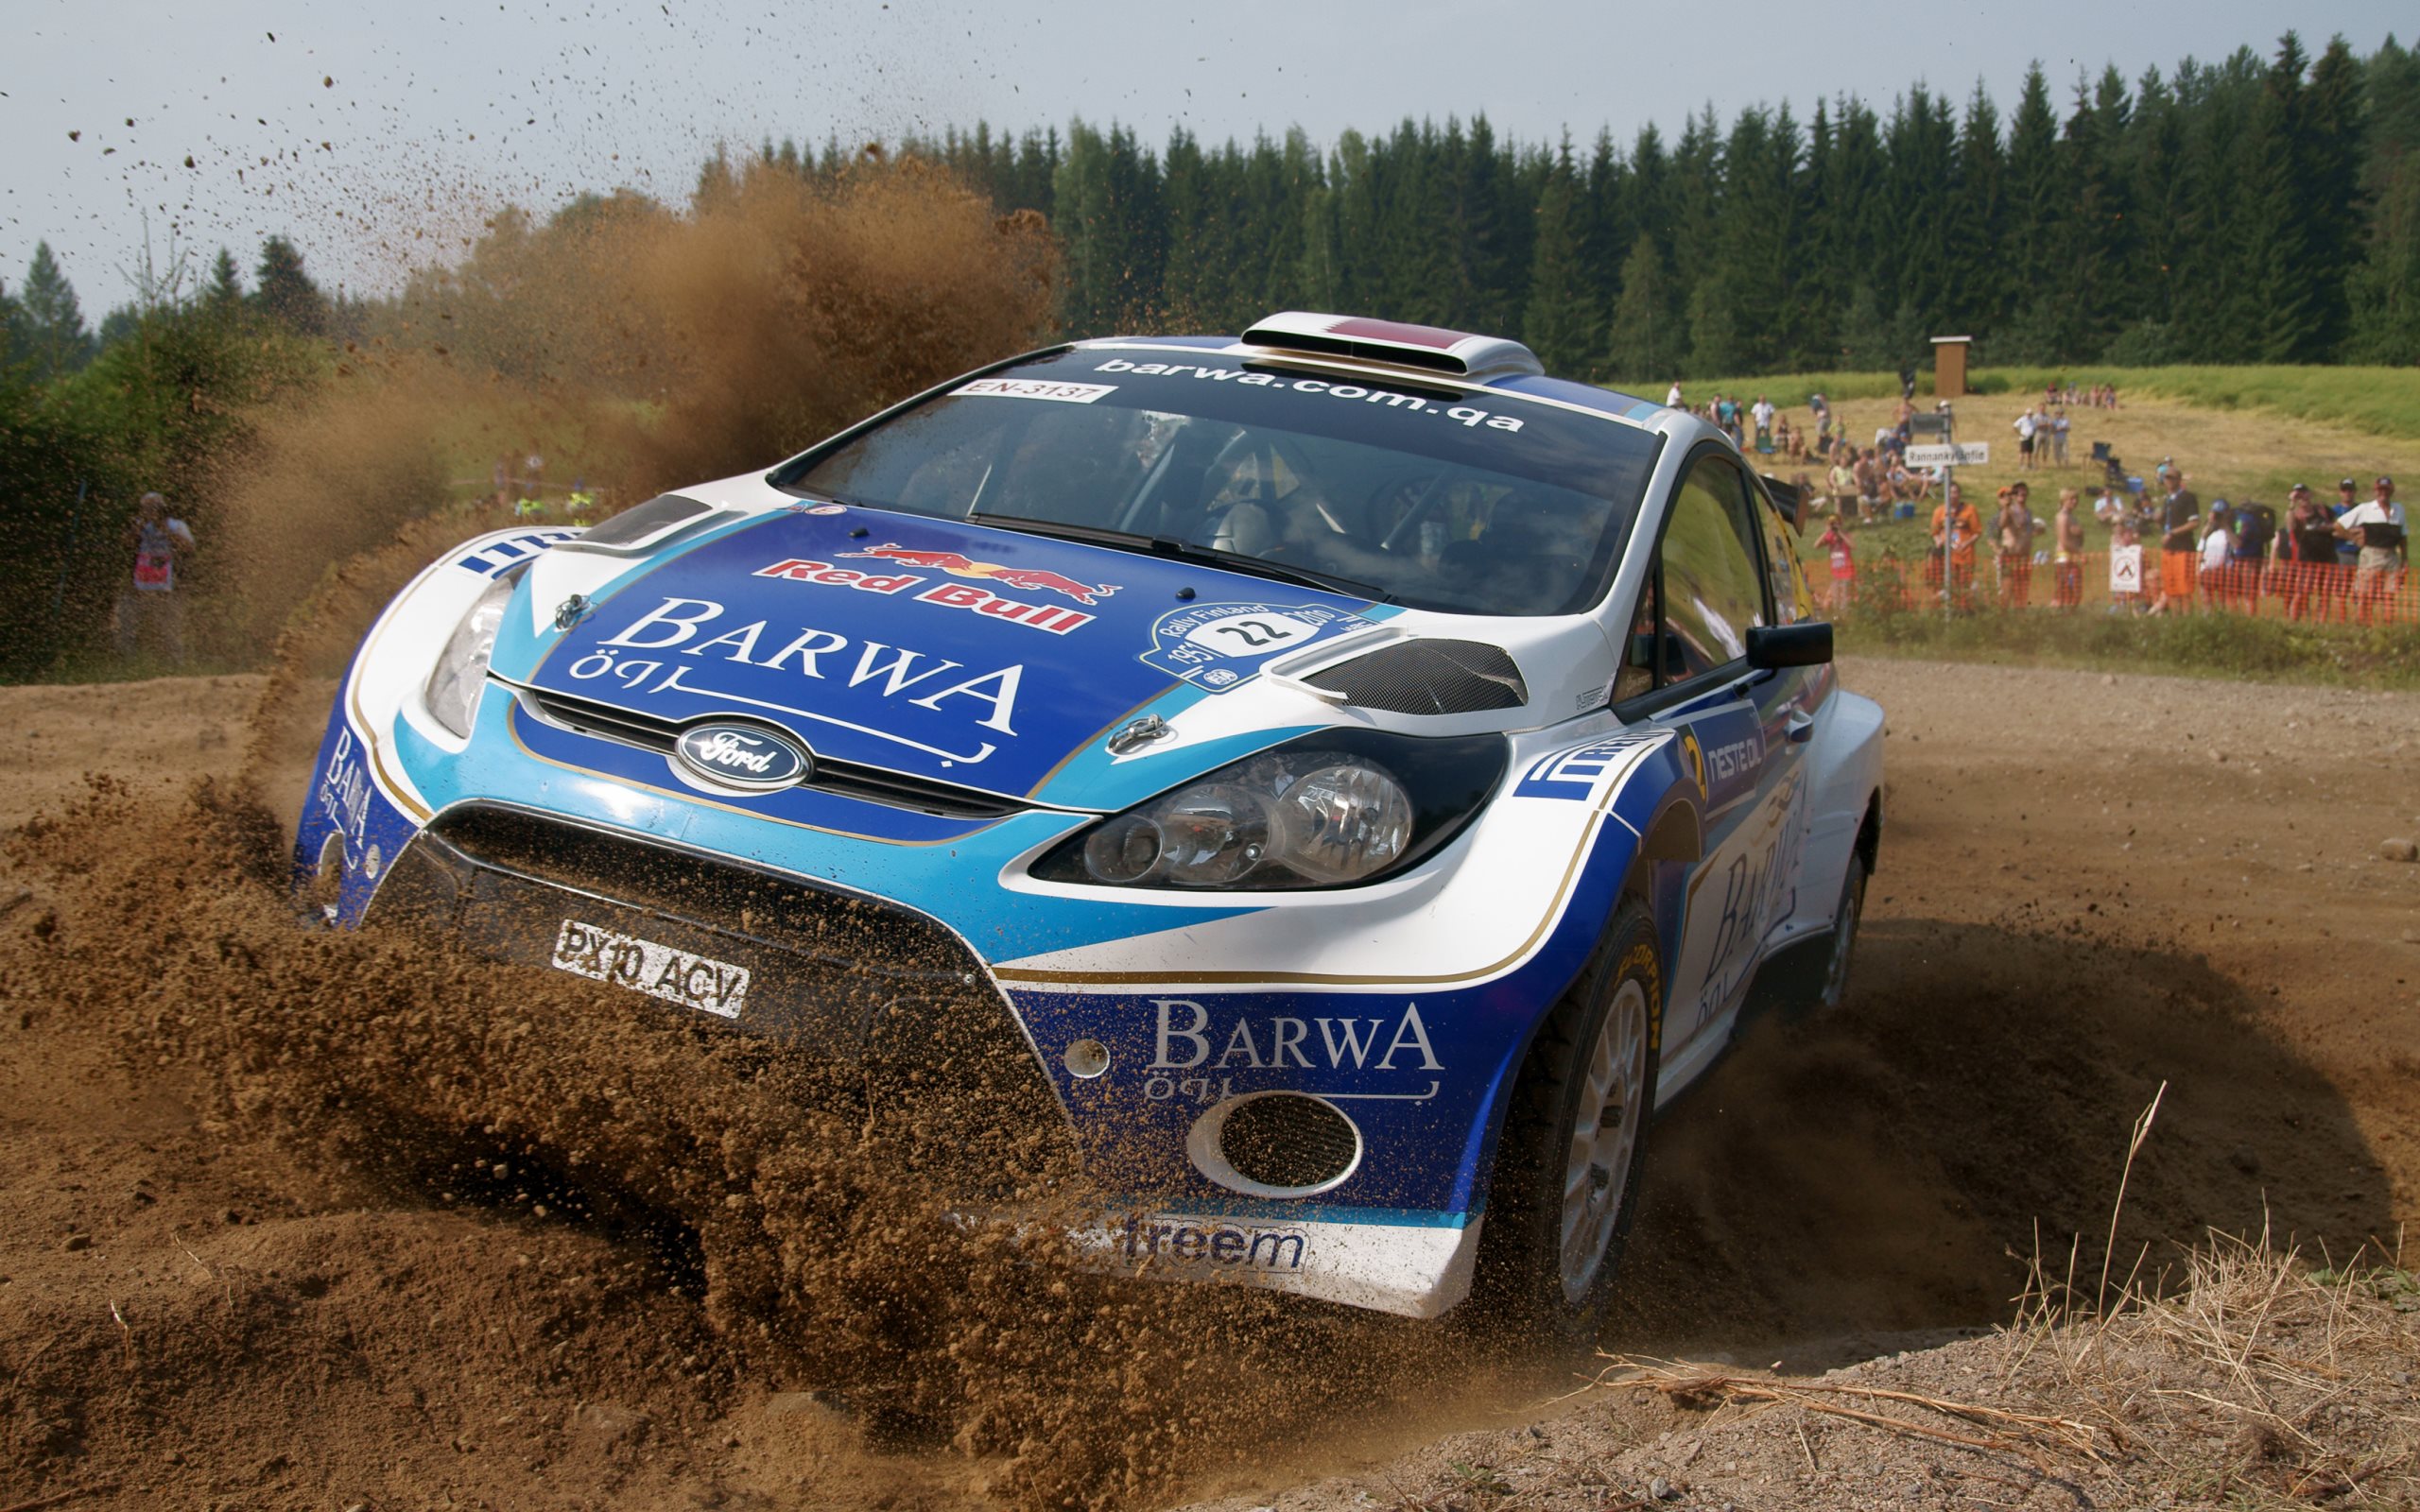 626119 descargar imagen rally, rallye, deporte, finlandia, vehículo: fondos de pantalla y protectores de pantalla gratis